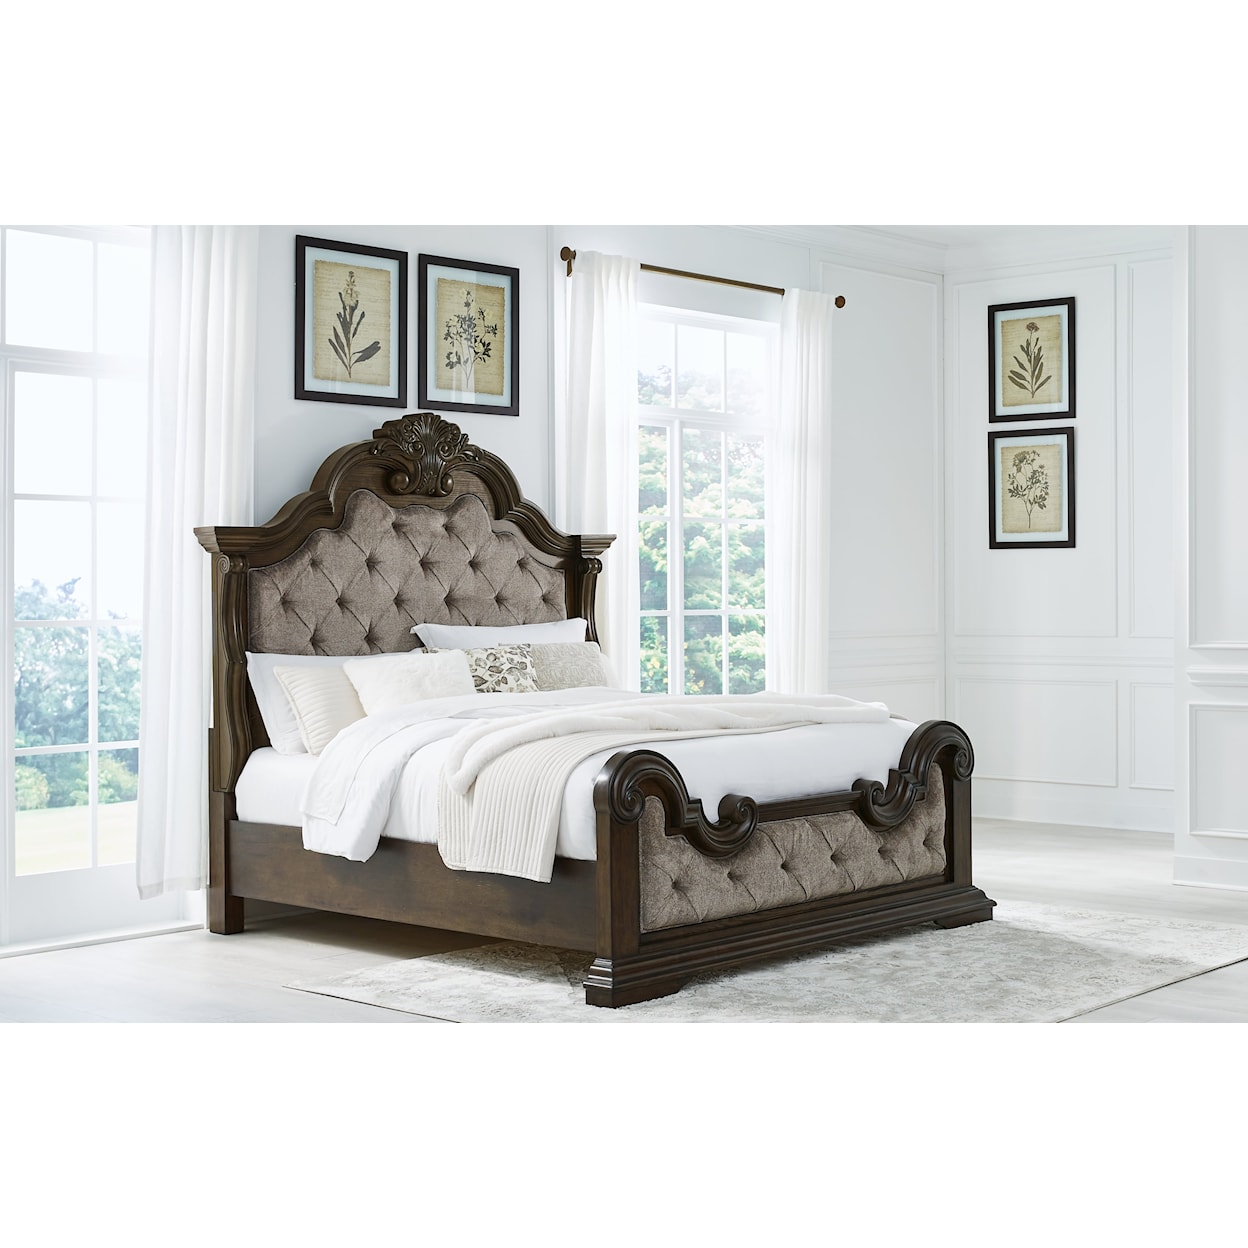 StyleLine Maylee California King Upholstered Bed